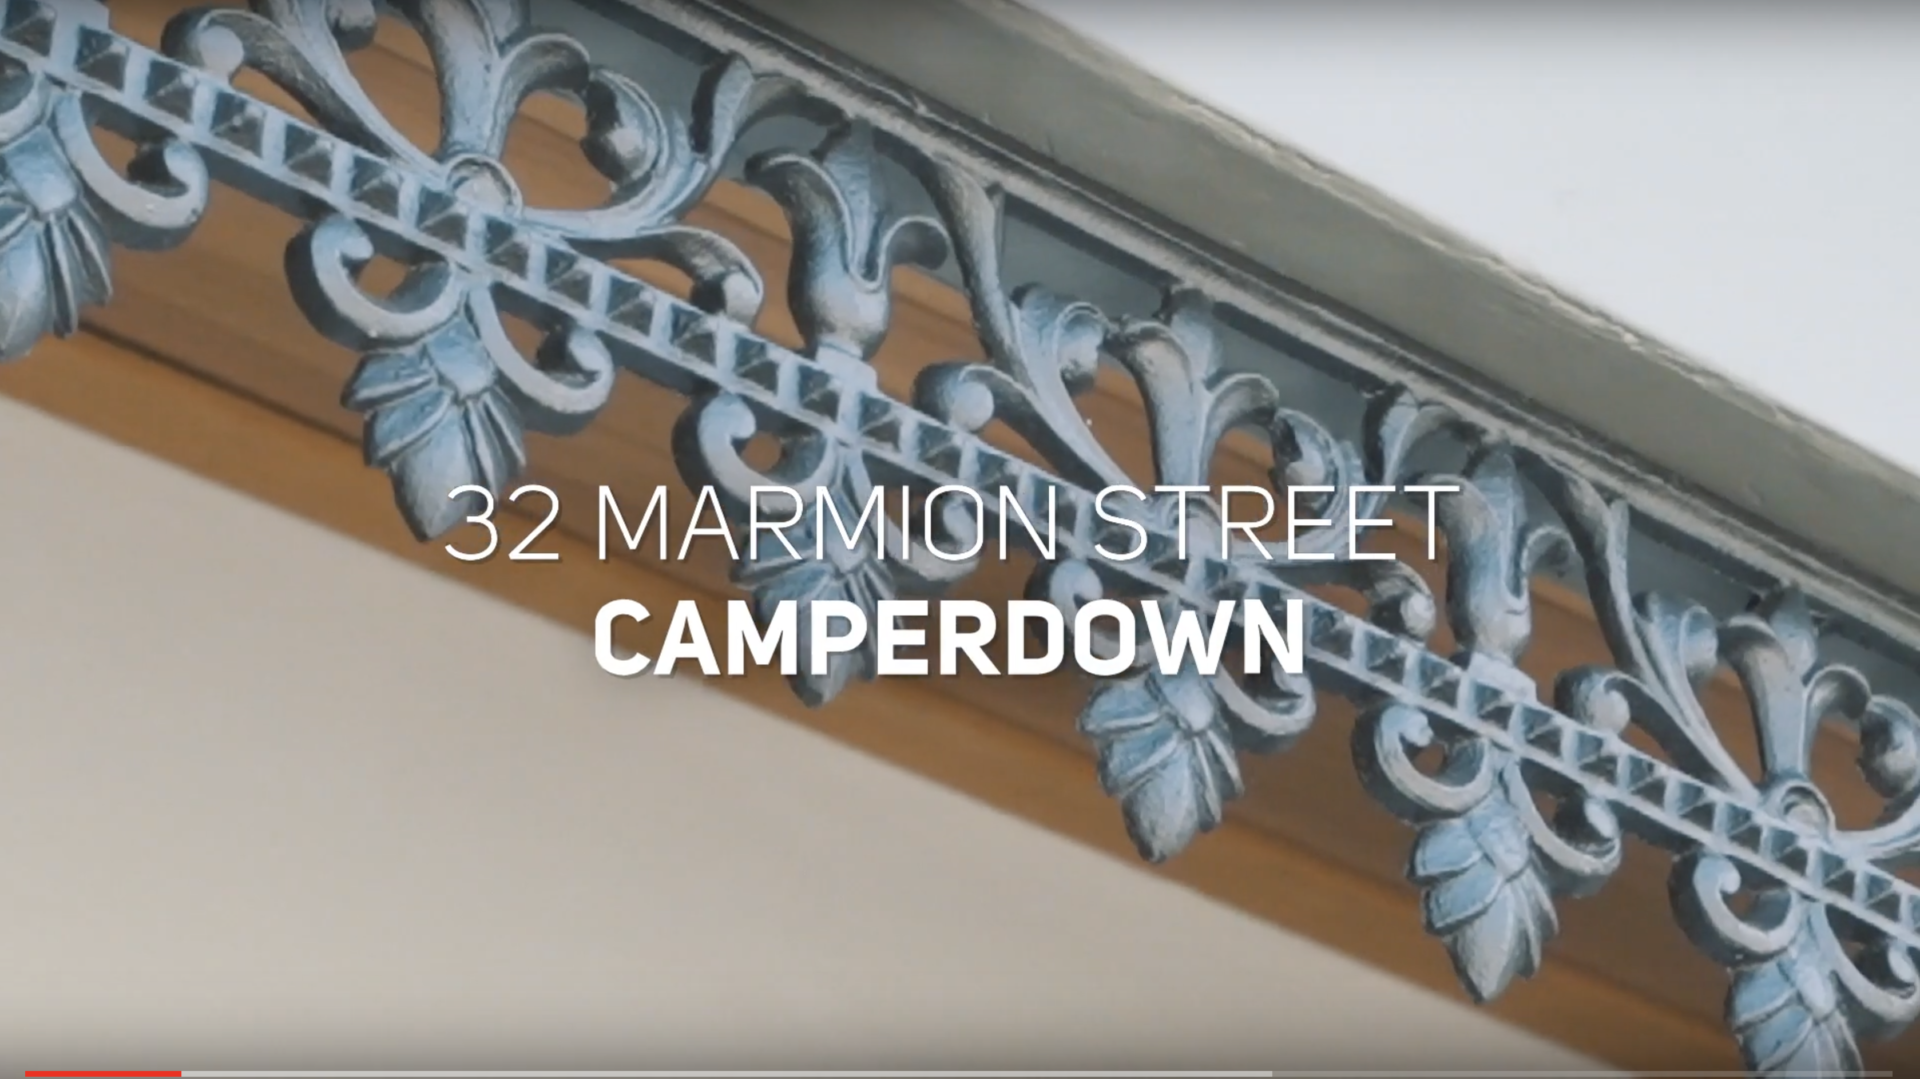 Marion street Camperdown luxury home real estate in Sydney